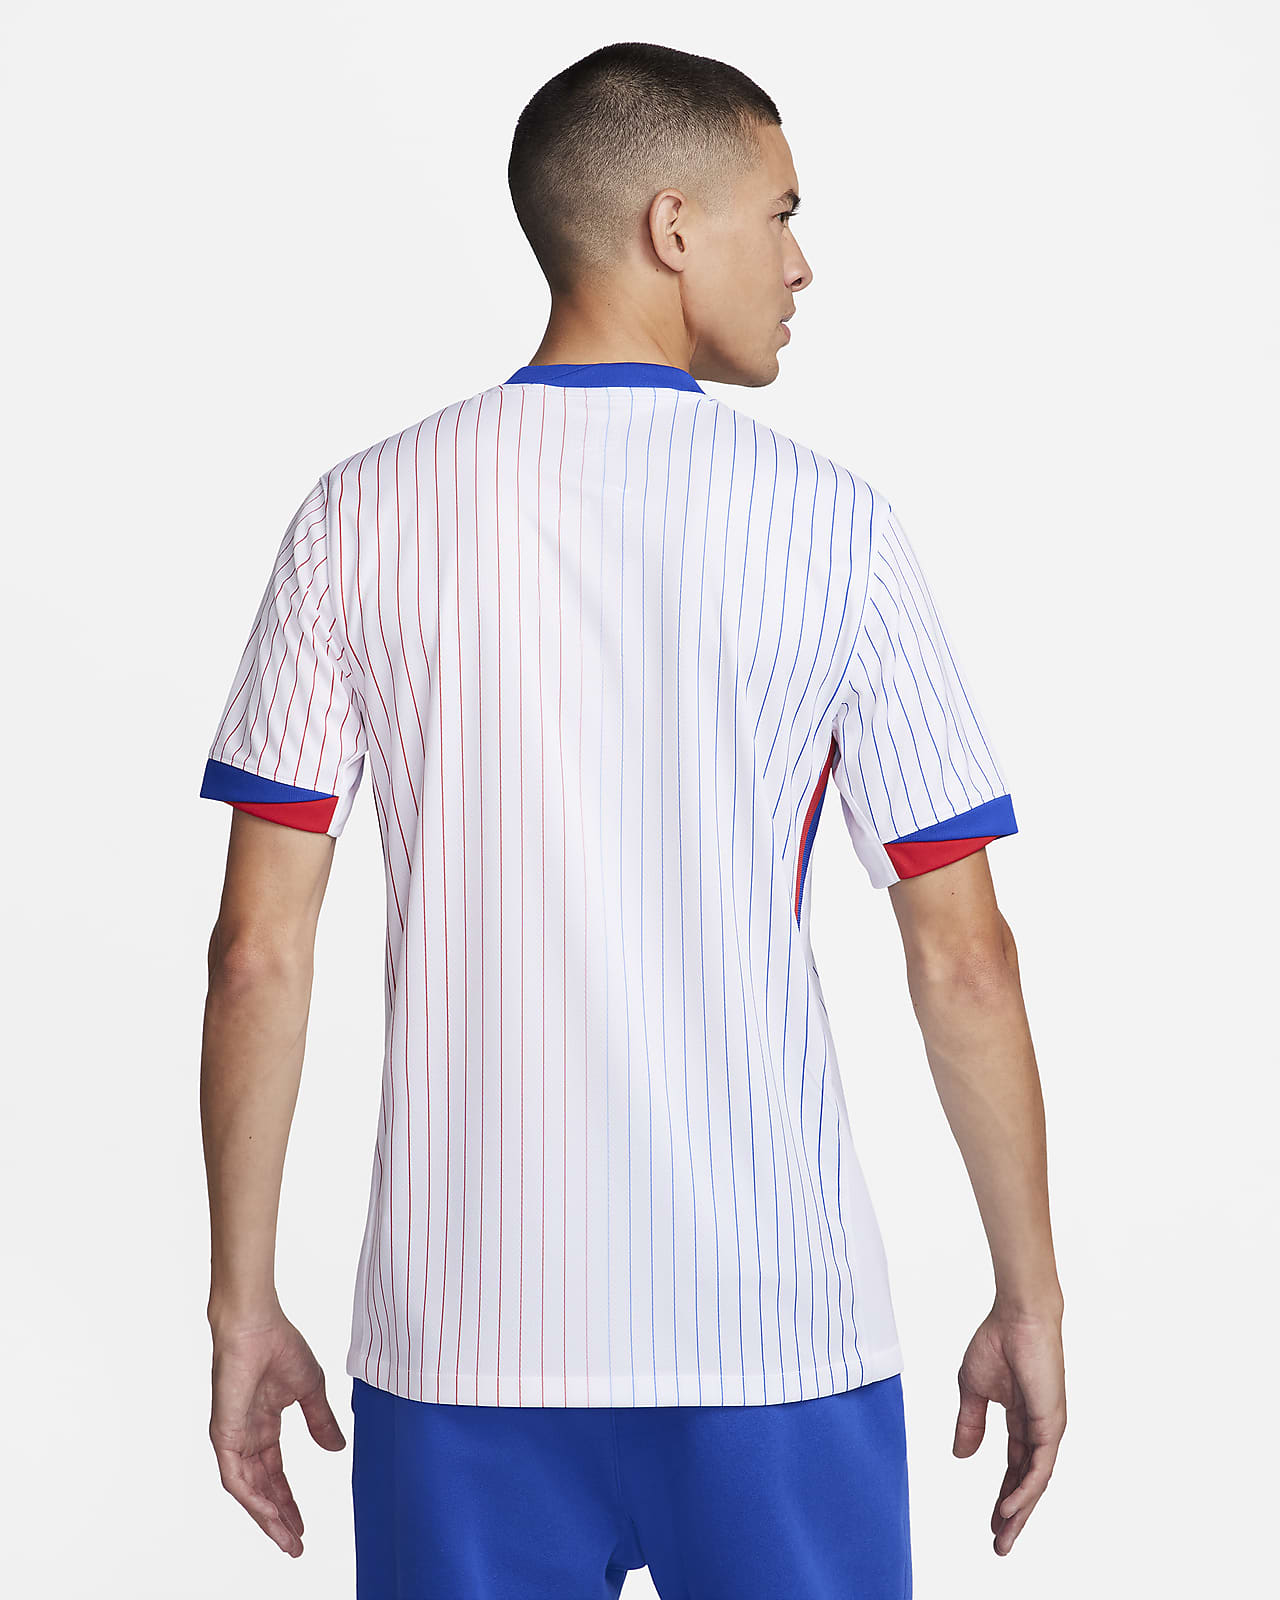 Nike FFF Short Sleeve Soccer Jersey White/Blackened Blue/University Red